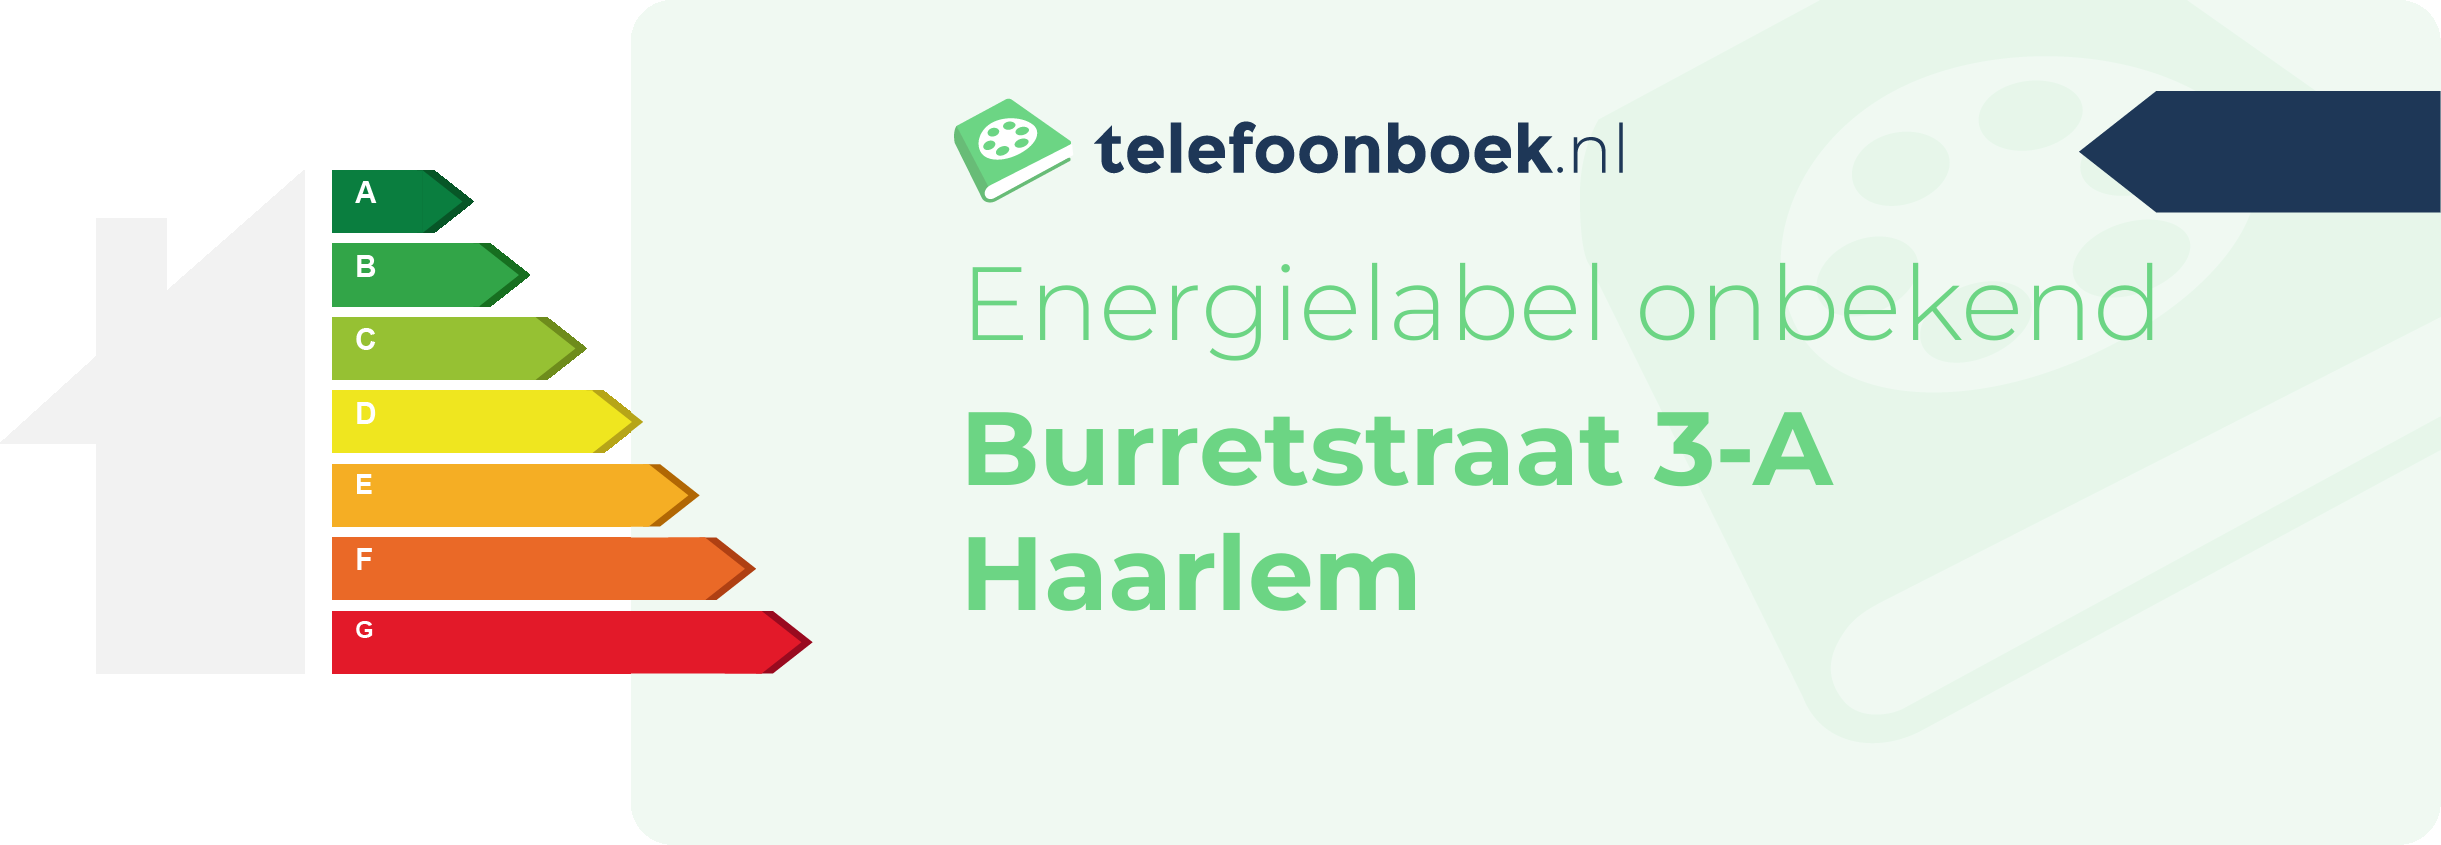 Energielabel Burretstraat 3-A Haarlem